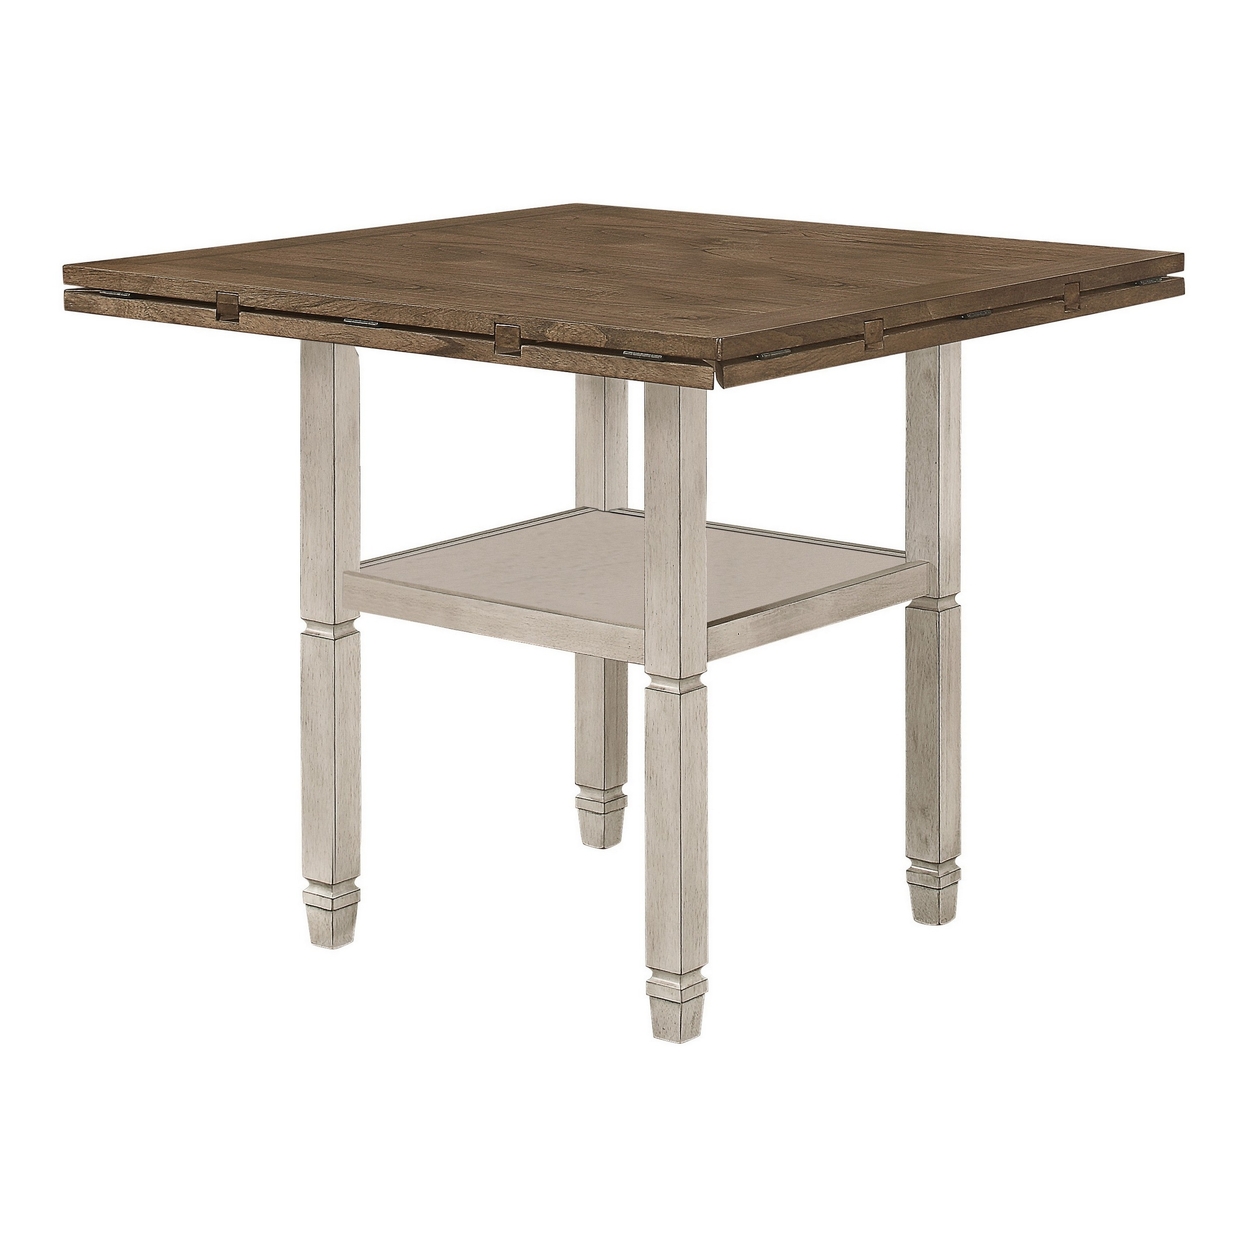 52-60 Inch Counter Height Table, Open Bottom Shelf, 4 Drop Leaves, Brown - Saltoro Sherpi